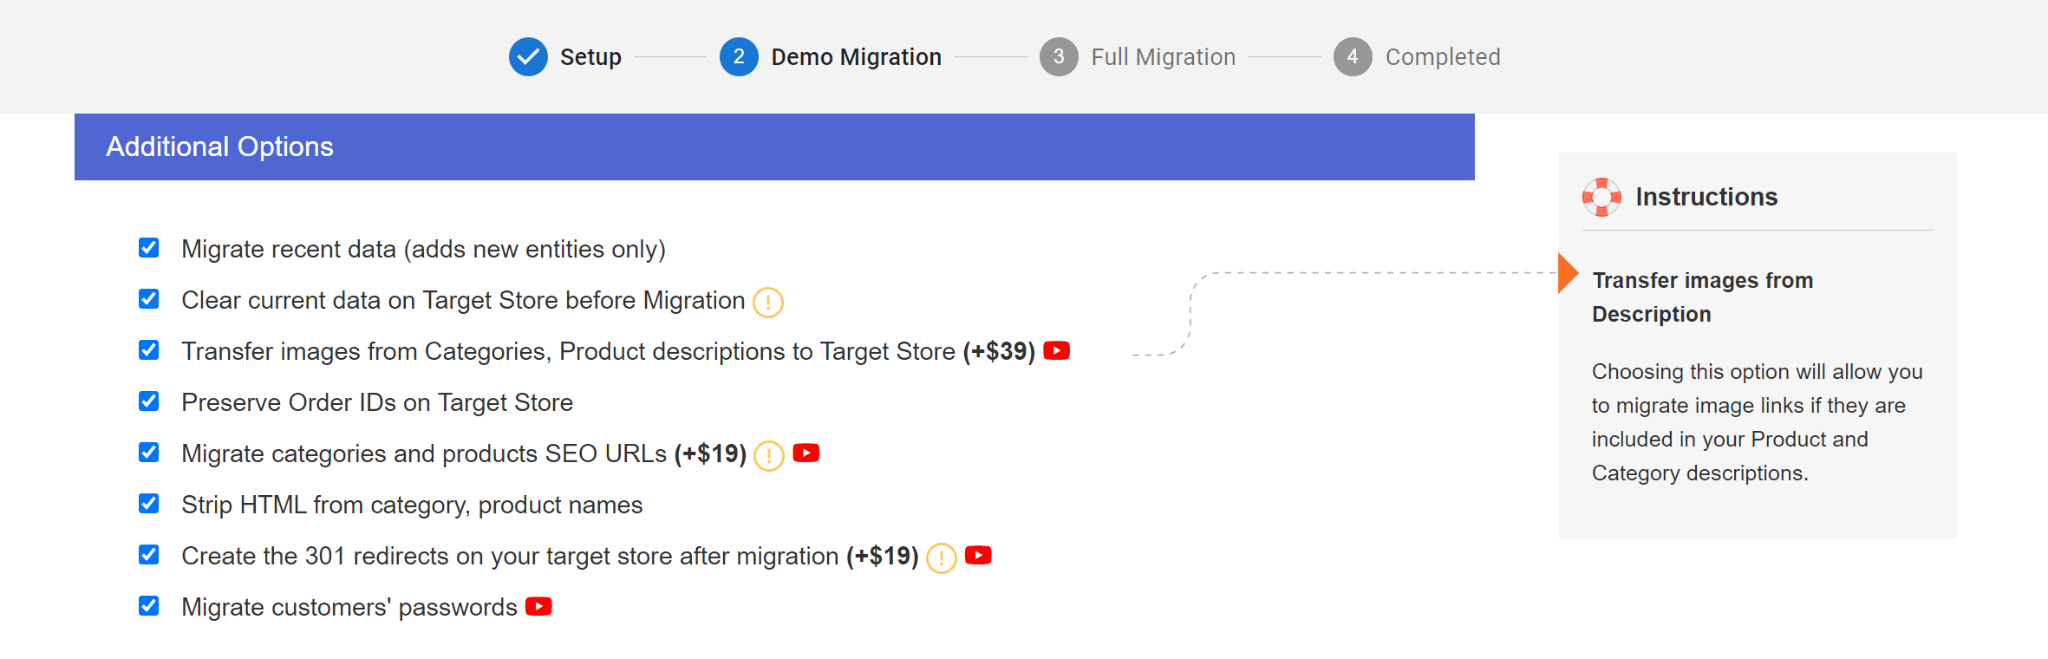 Additional migration options